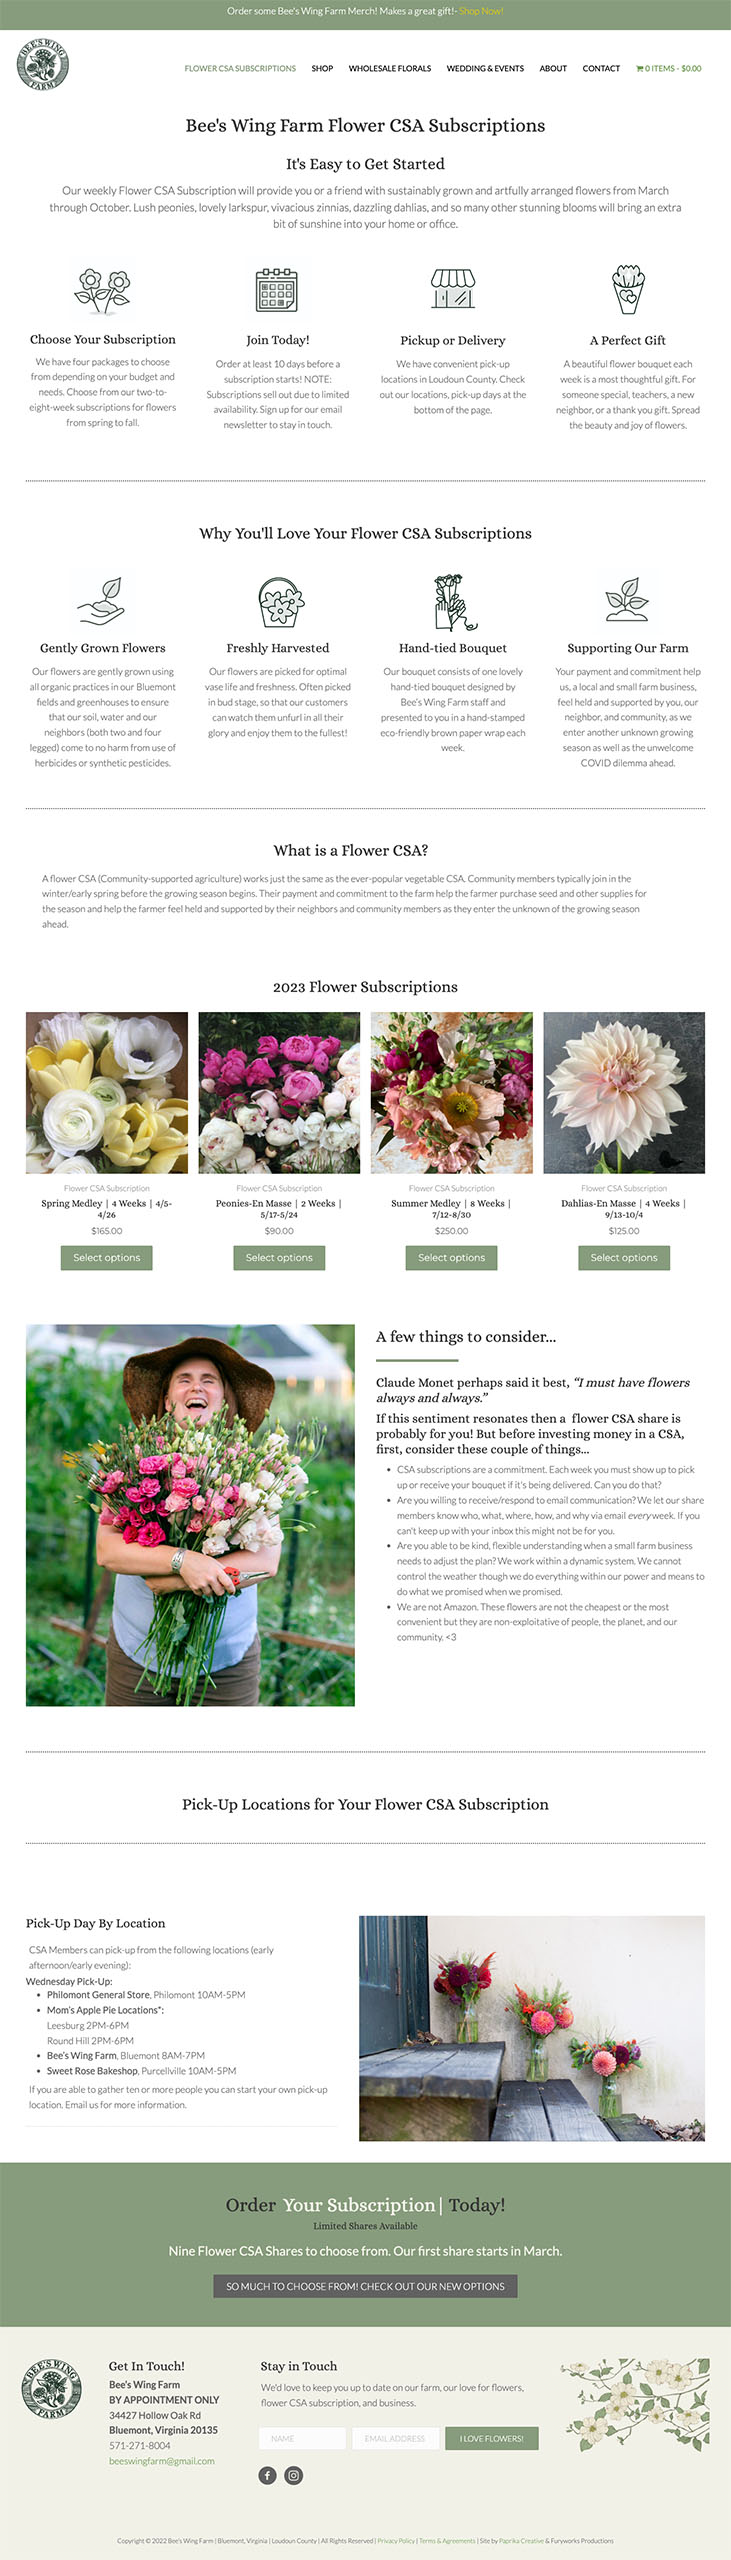 E-commerce website design for a flower business selling flower subscriptions